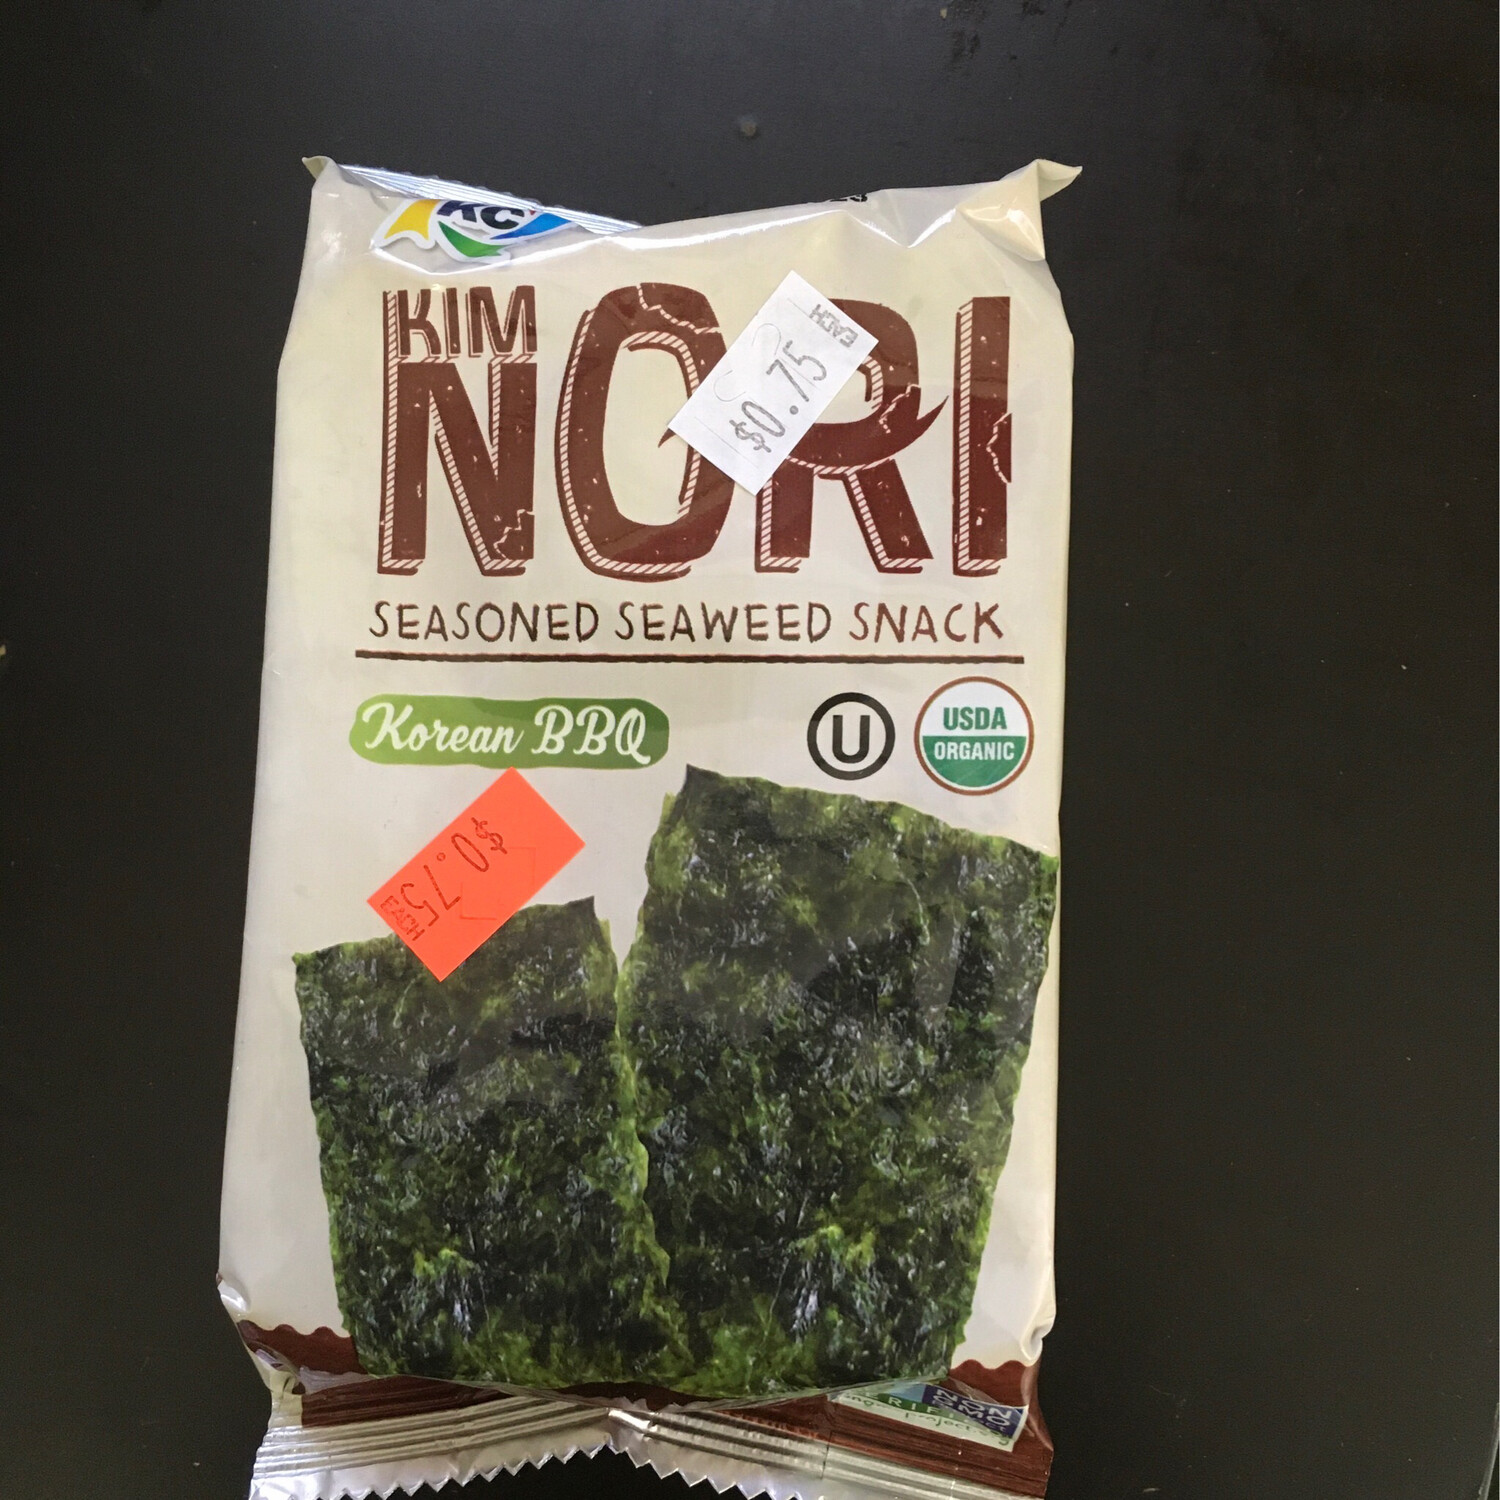 Kim Nori Seasoned Seaweed Snack